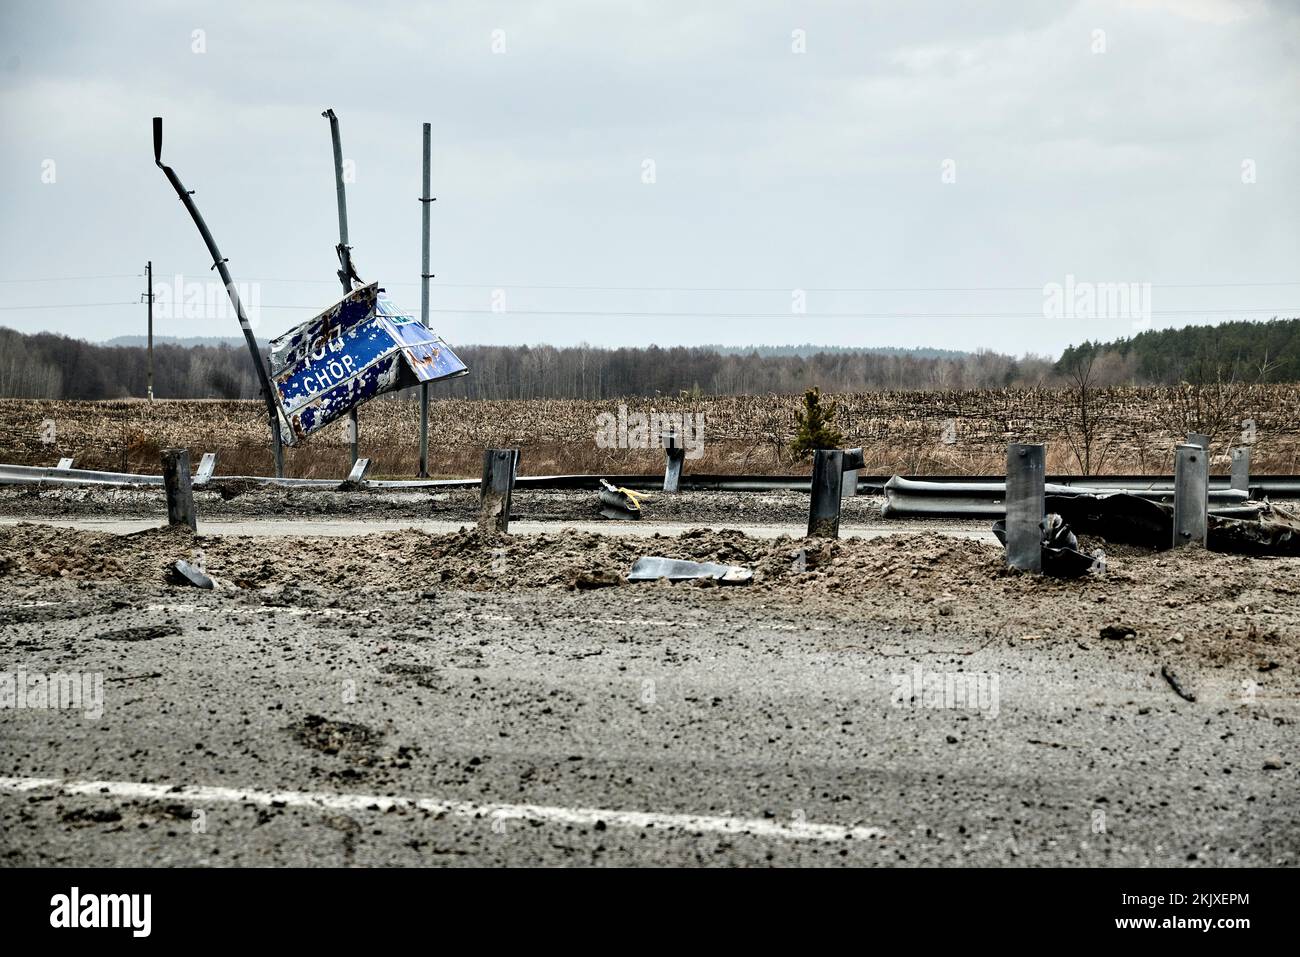 Antonin Burat / Le Pictorium -  War in Ukraine: David stands up to Goliath -  26/3/2022  -  Ukraine / OBLAST OF KYIV  -  A damaged road sign, evidence Stock Photo